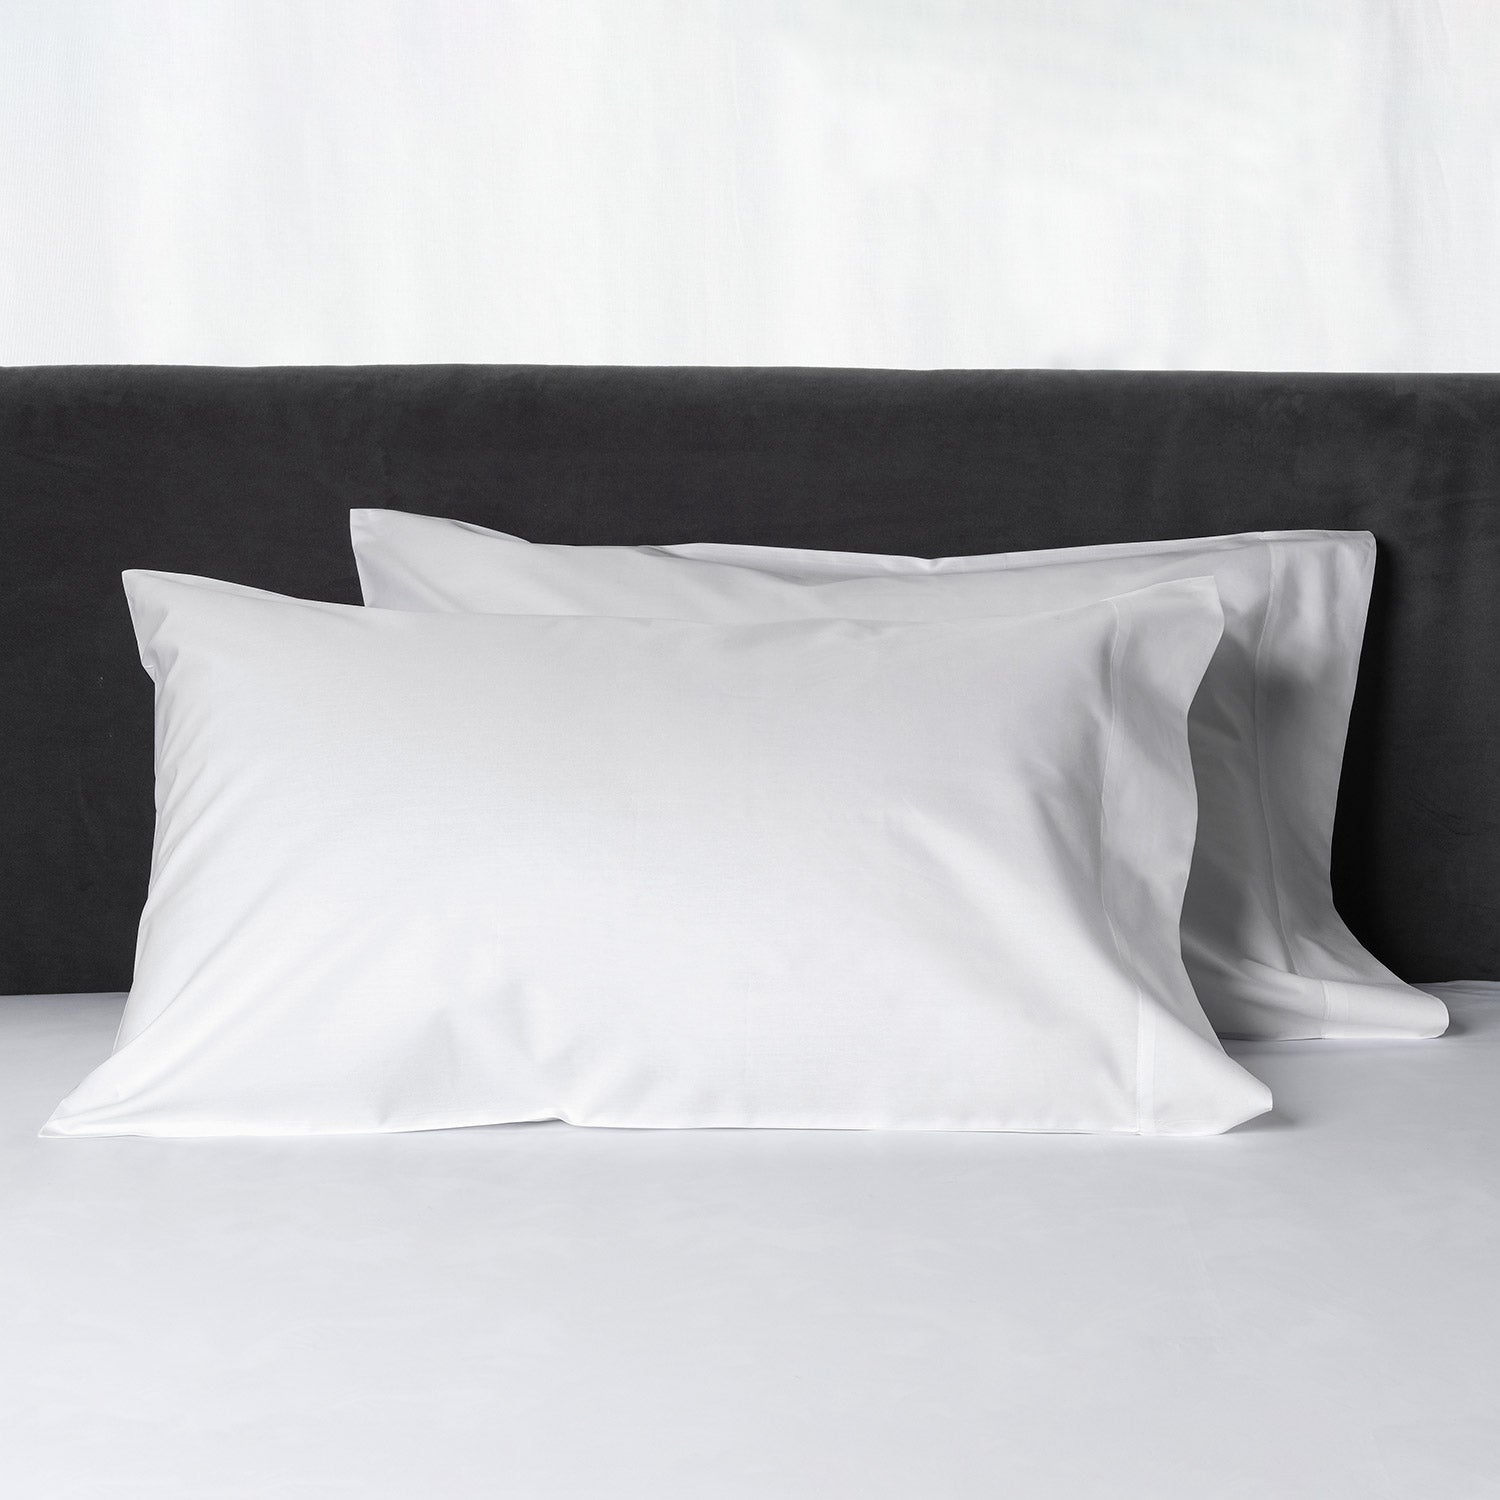 Lineare Sateen Sheets & Pillowcases, White Pillowcase Pair / Standard